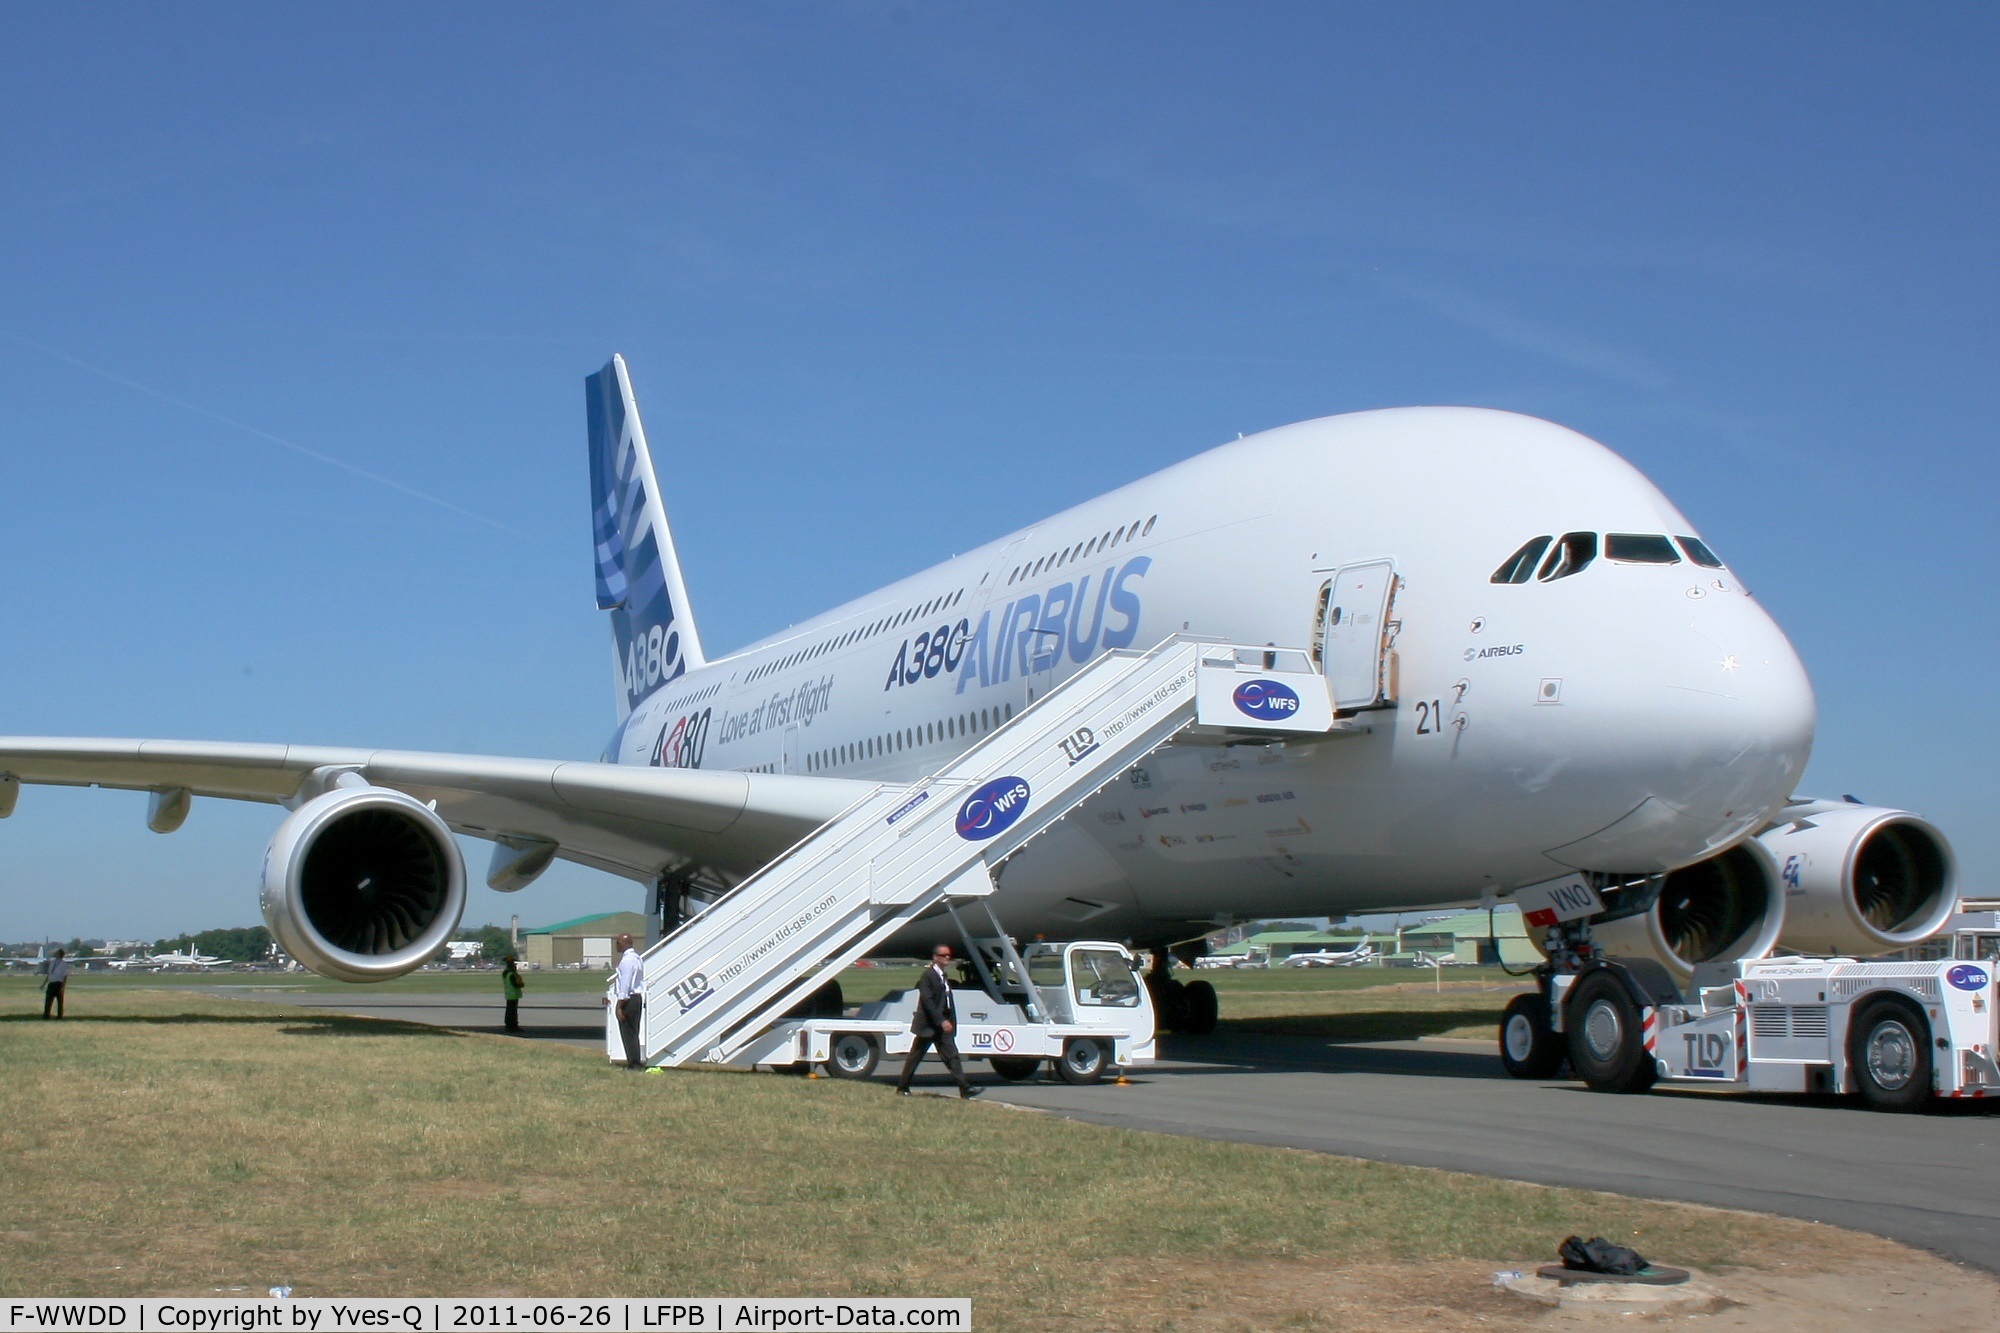 F-WWDD, 2005 Airbus A380-861 C/N 004, Airbus A380-861, Static display, Paris Le Bourget (LFPB-LBG) Air Show in june 2011